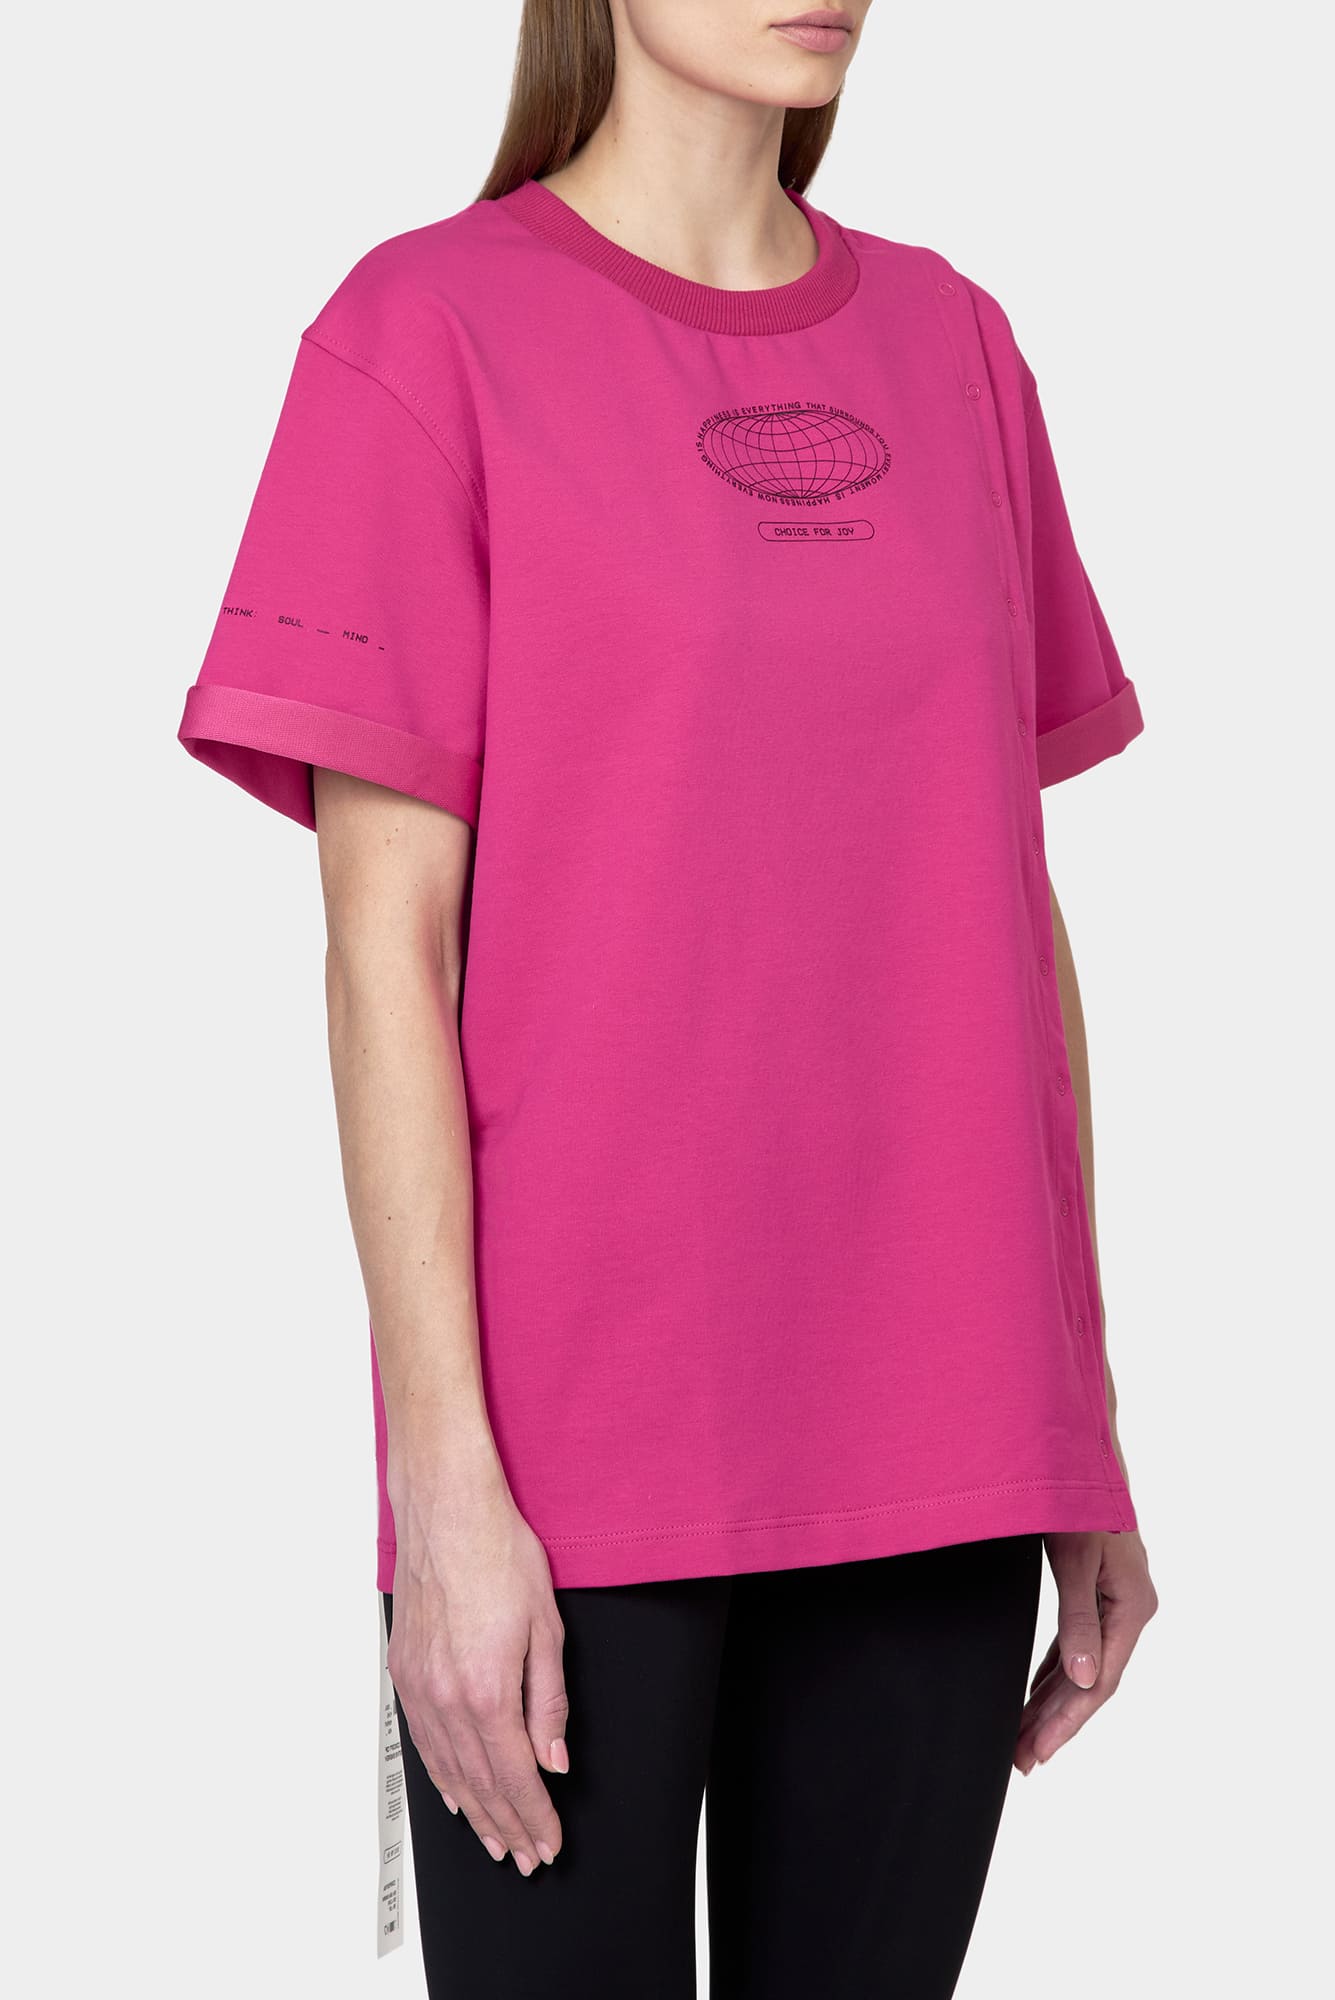 Pink T-shirt CHOISE for JOY